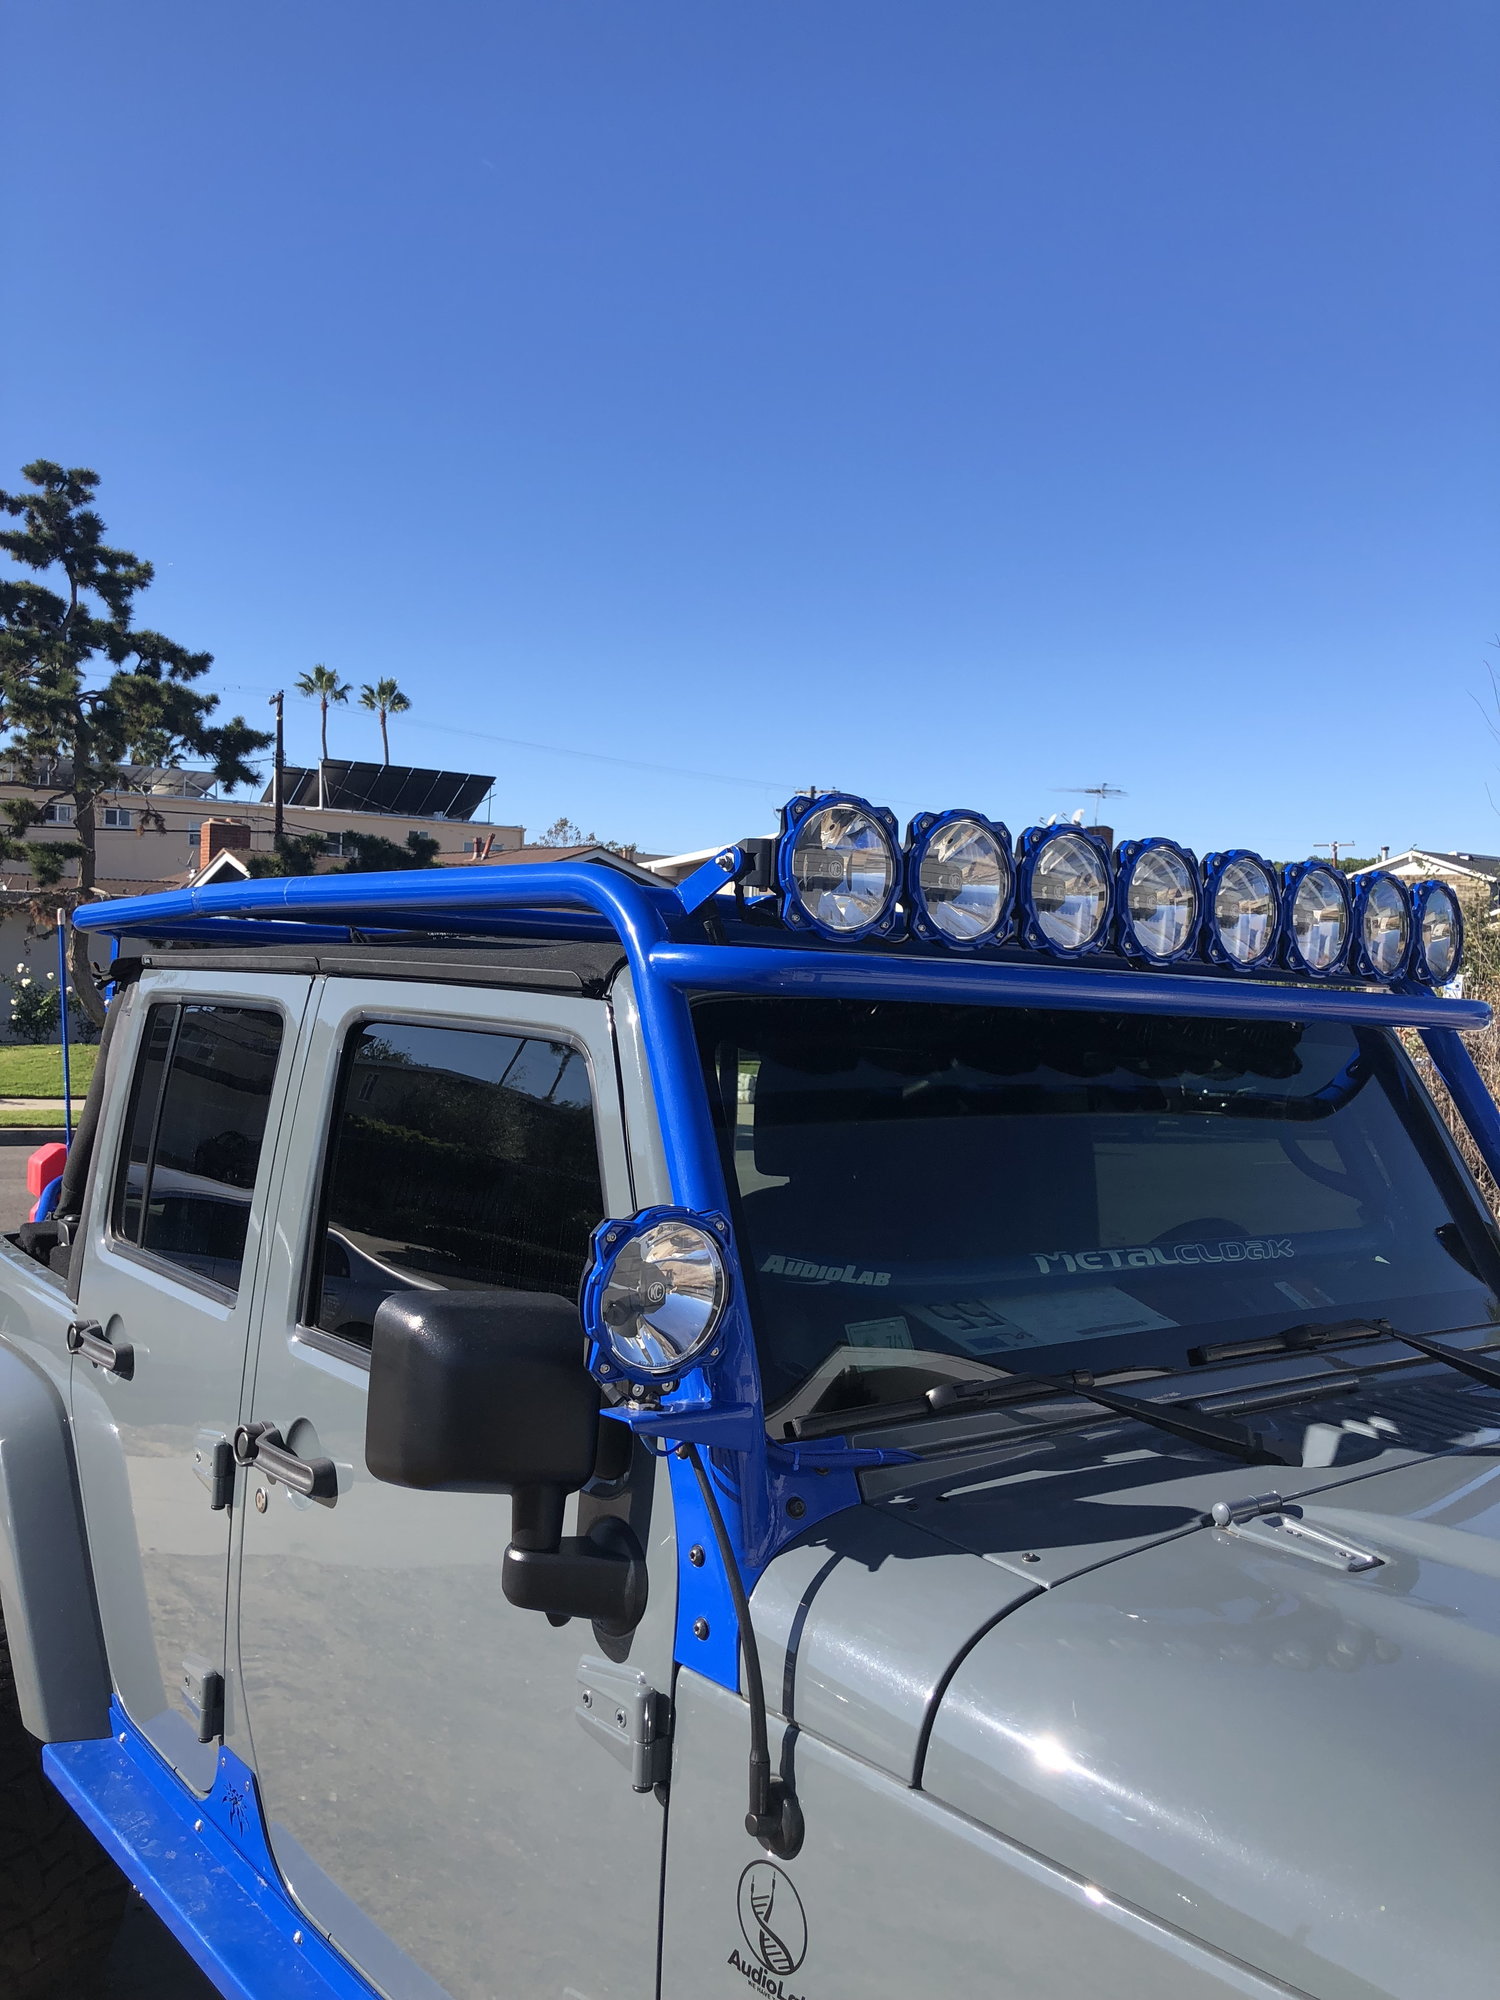 Miscellaneous - Custom JKU rack - Used - 2007 to 2018 Jeep Wrangler - La, CA 90277, United States